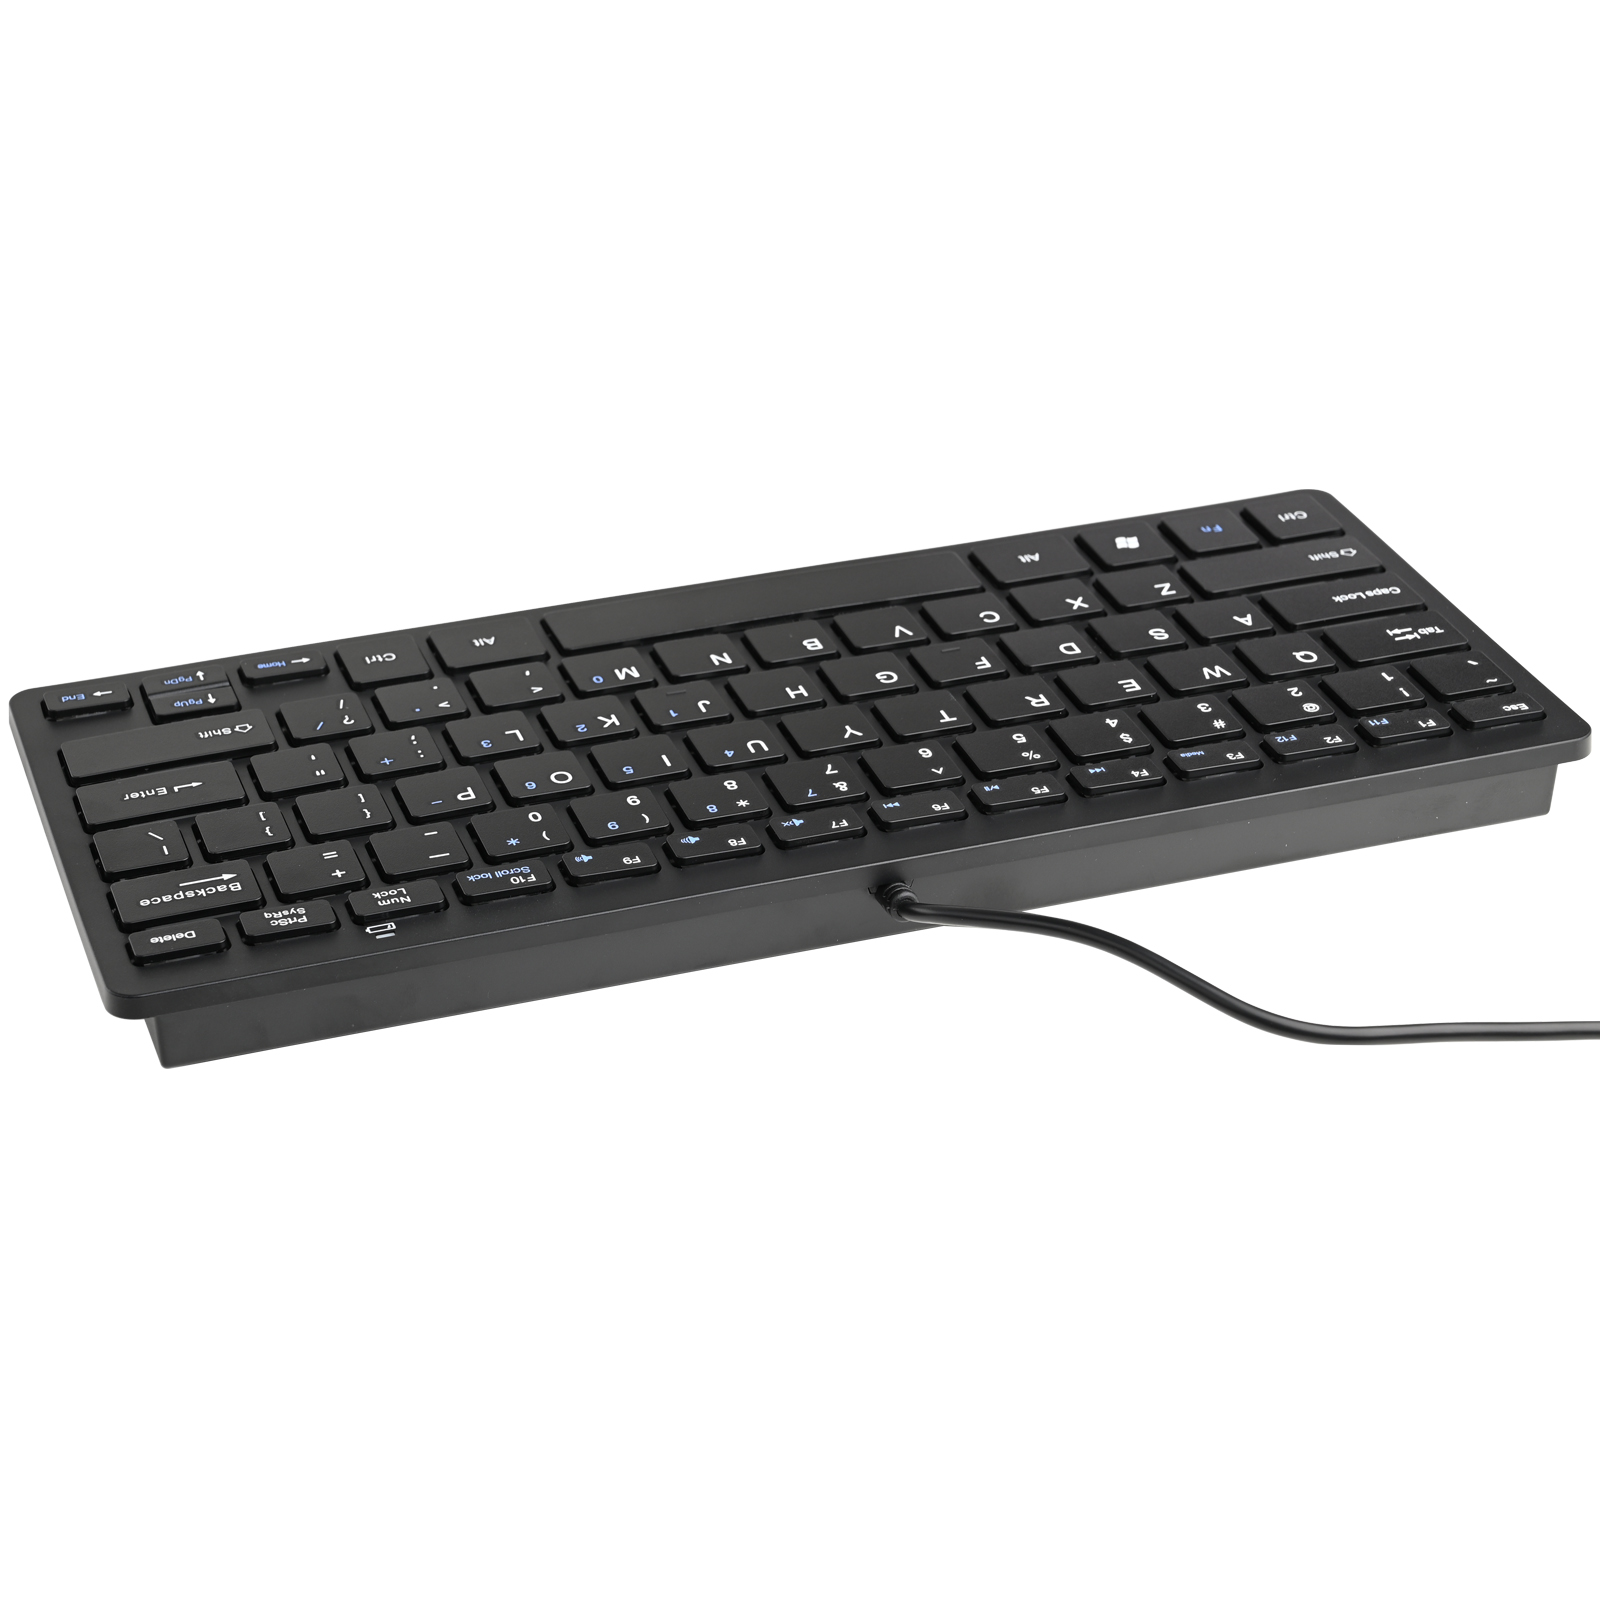 iKKEGOL Slim 78Key USB Compact Chocolate Keyboard - Click Image to Close